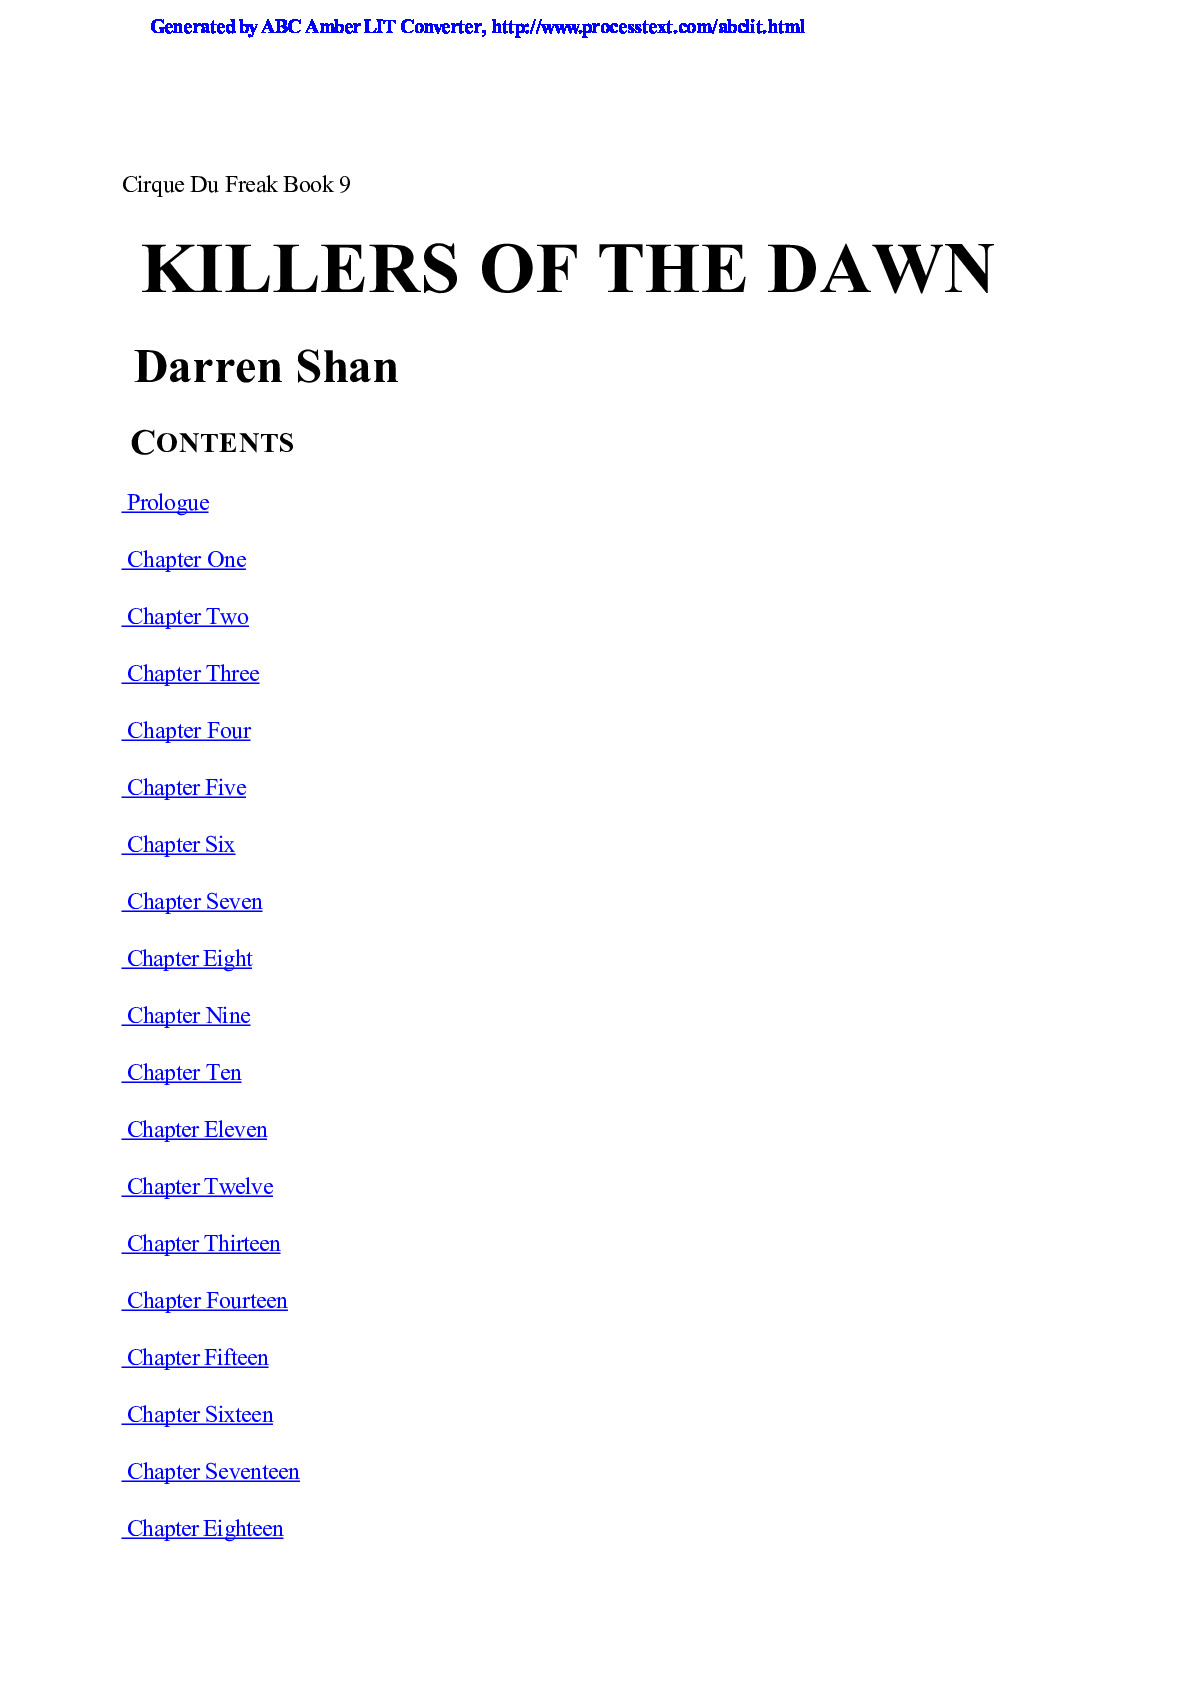 Shan, Darren – Cirque Du Freak 09 – Killers of the Dawn